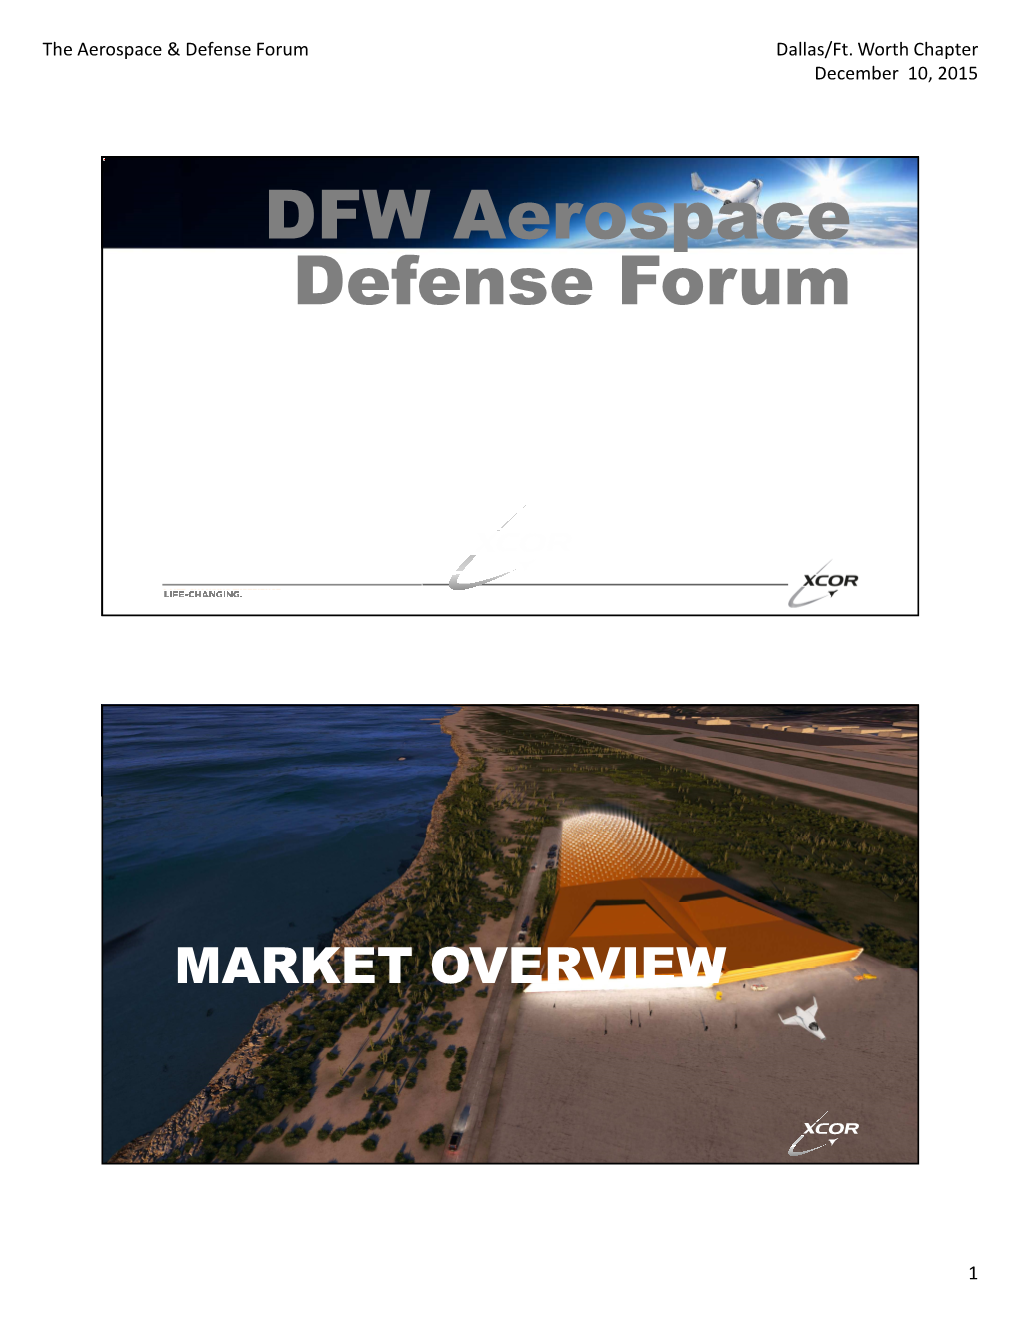 DFW Aerospace Defense Forum XCOR CORP December 2015